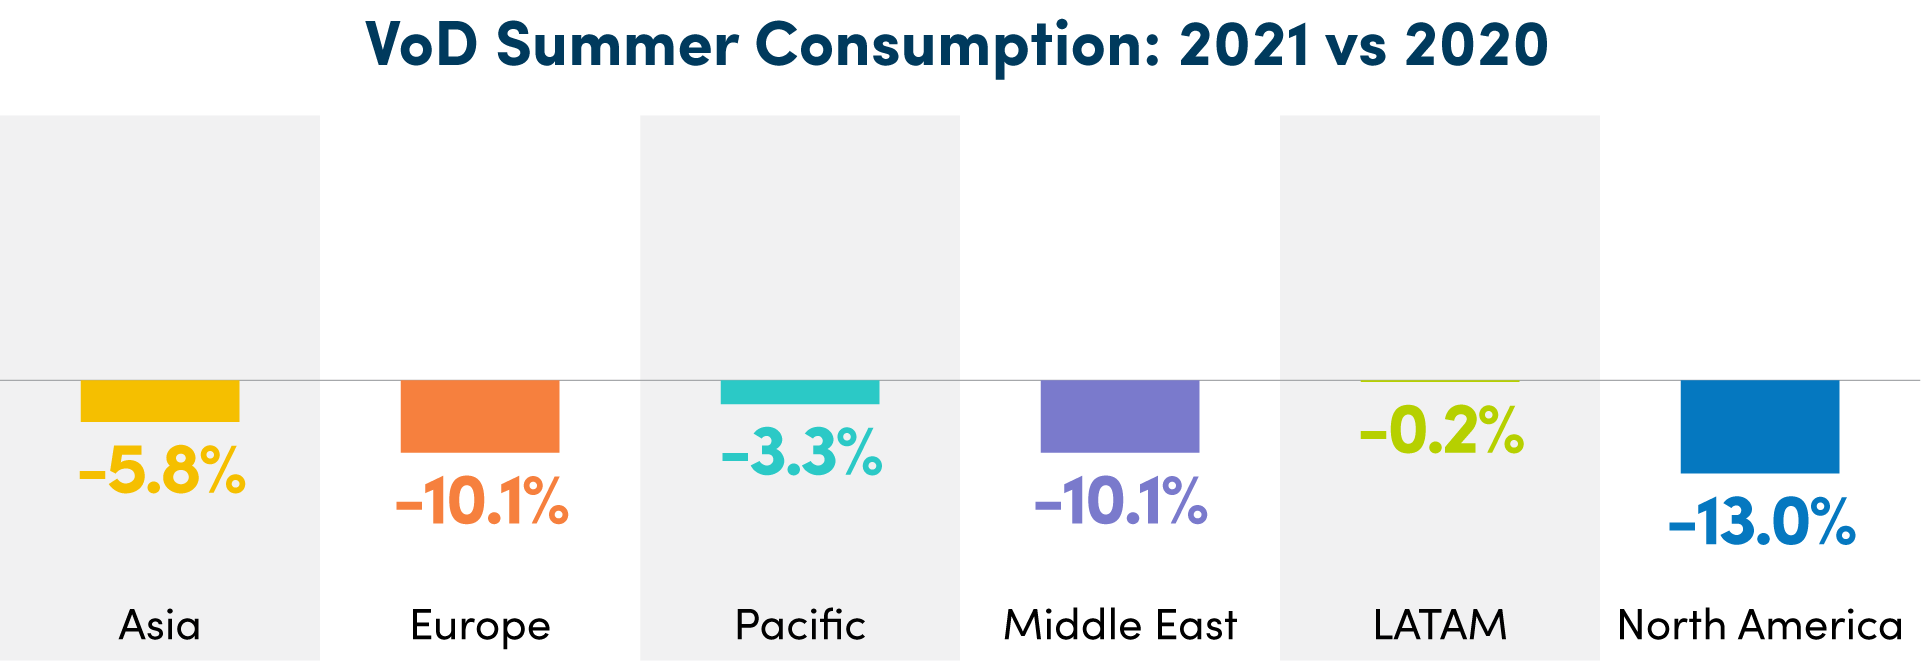 VOD Summer consumption: 2021 vs 2020